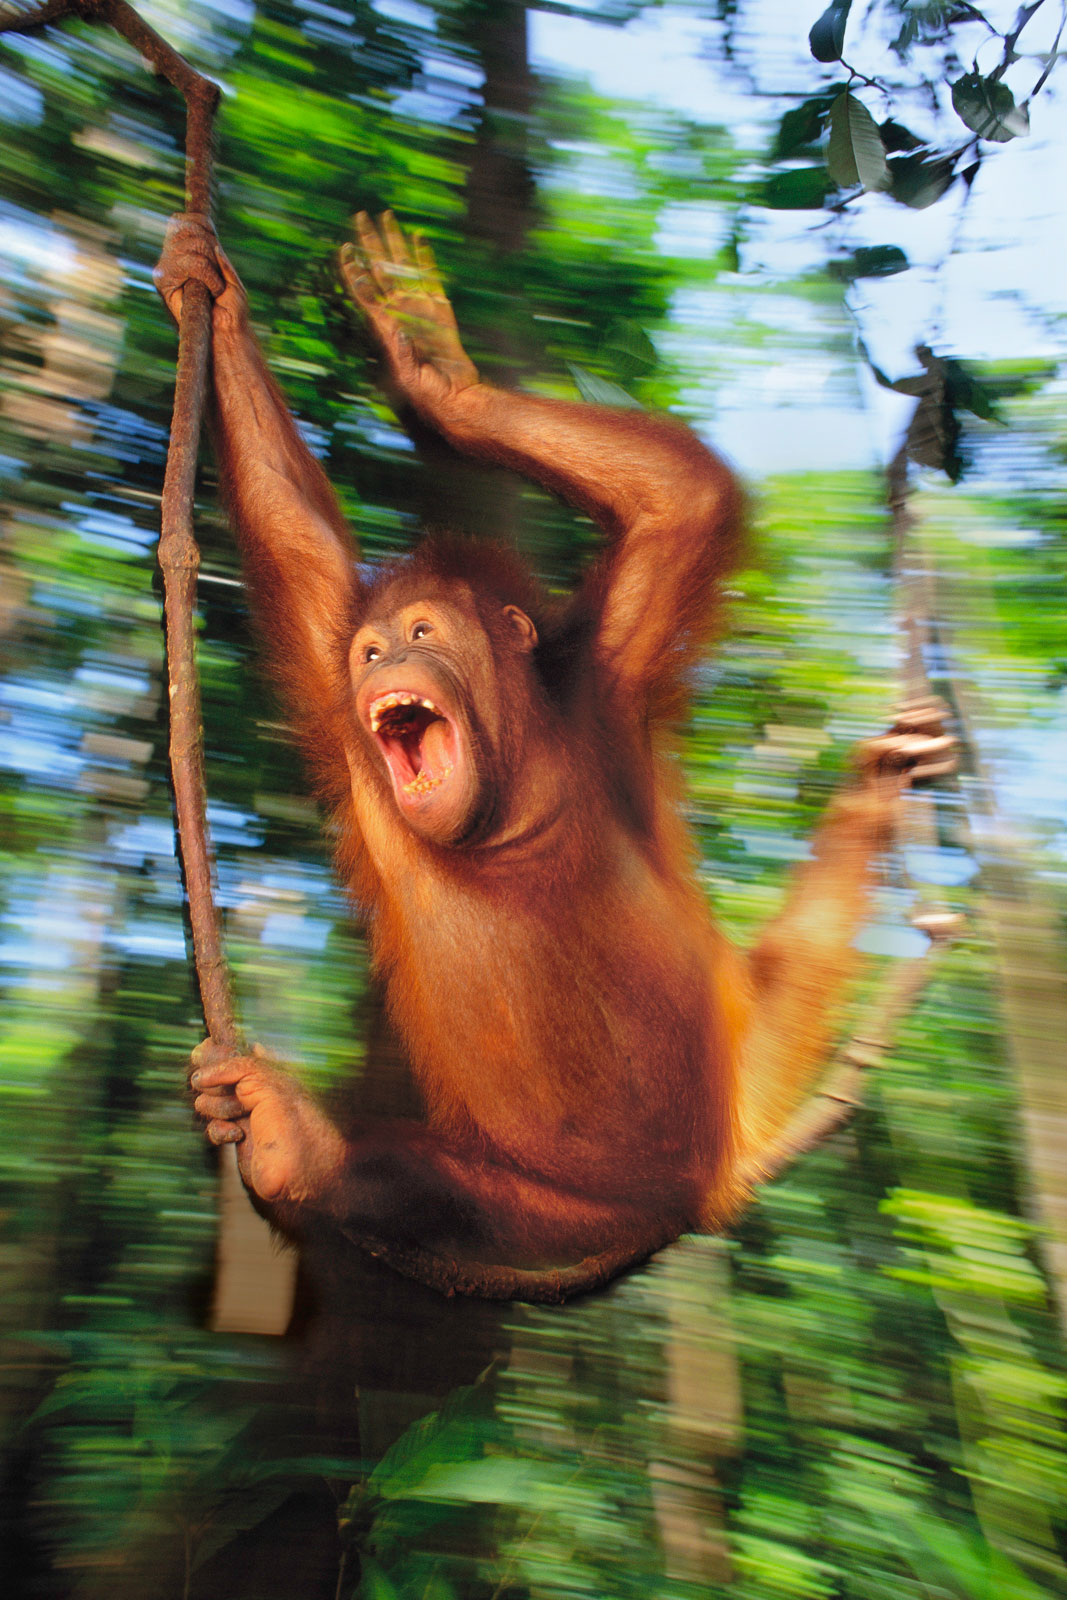 Juvenile orangutan swinging, Sepilok Reserve, Sabah, Borneo